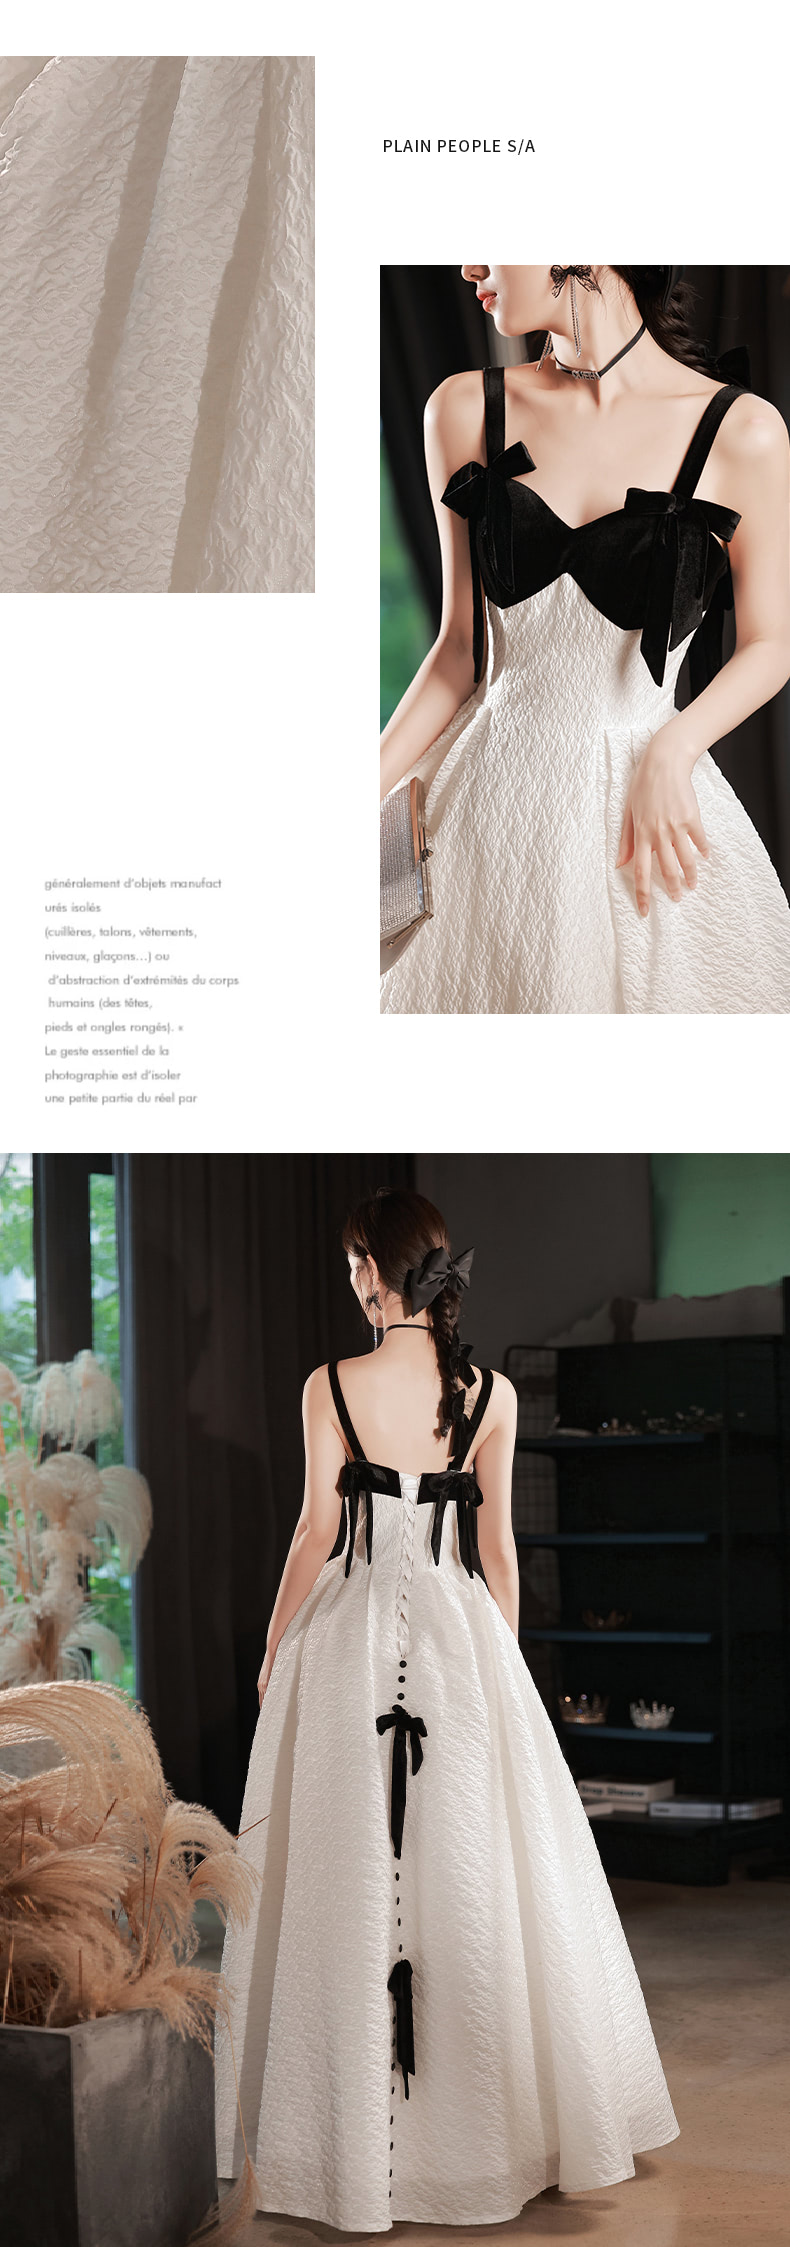 A-Line-Slip-Maxi-Evening-Dress-Boutique-Formal-Outfit-Plus-Size15.jpg